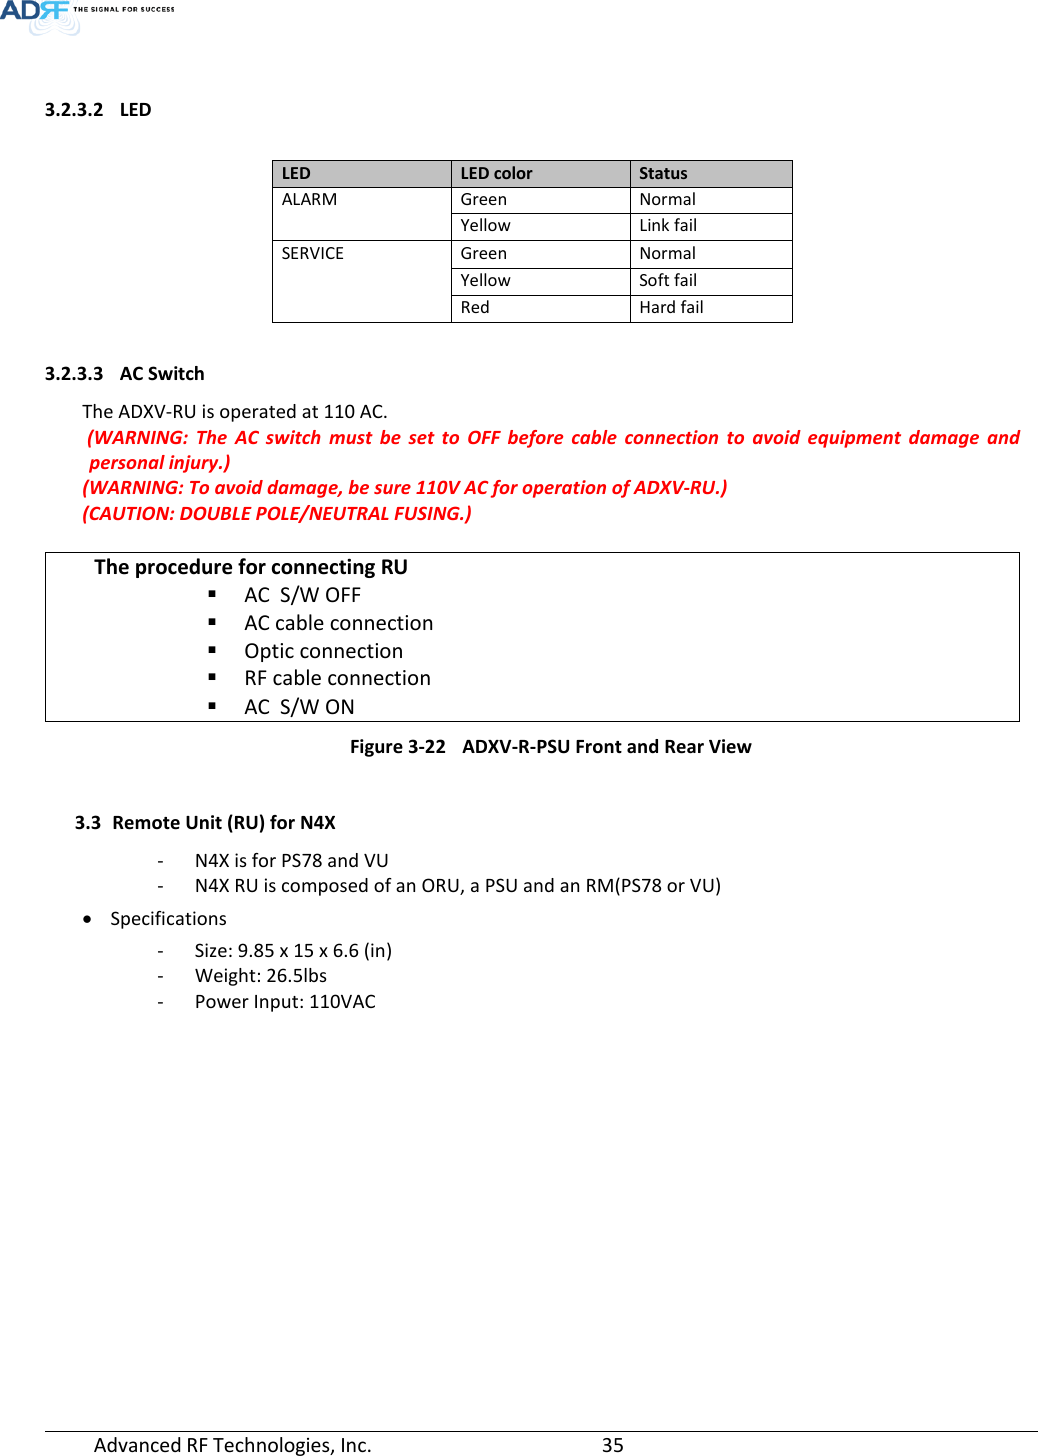 Page 35 of ADRF KOREA ADXV-R-78P-NB DAS (Distributed Antenna System) User Manual ADXV DAS